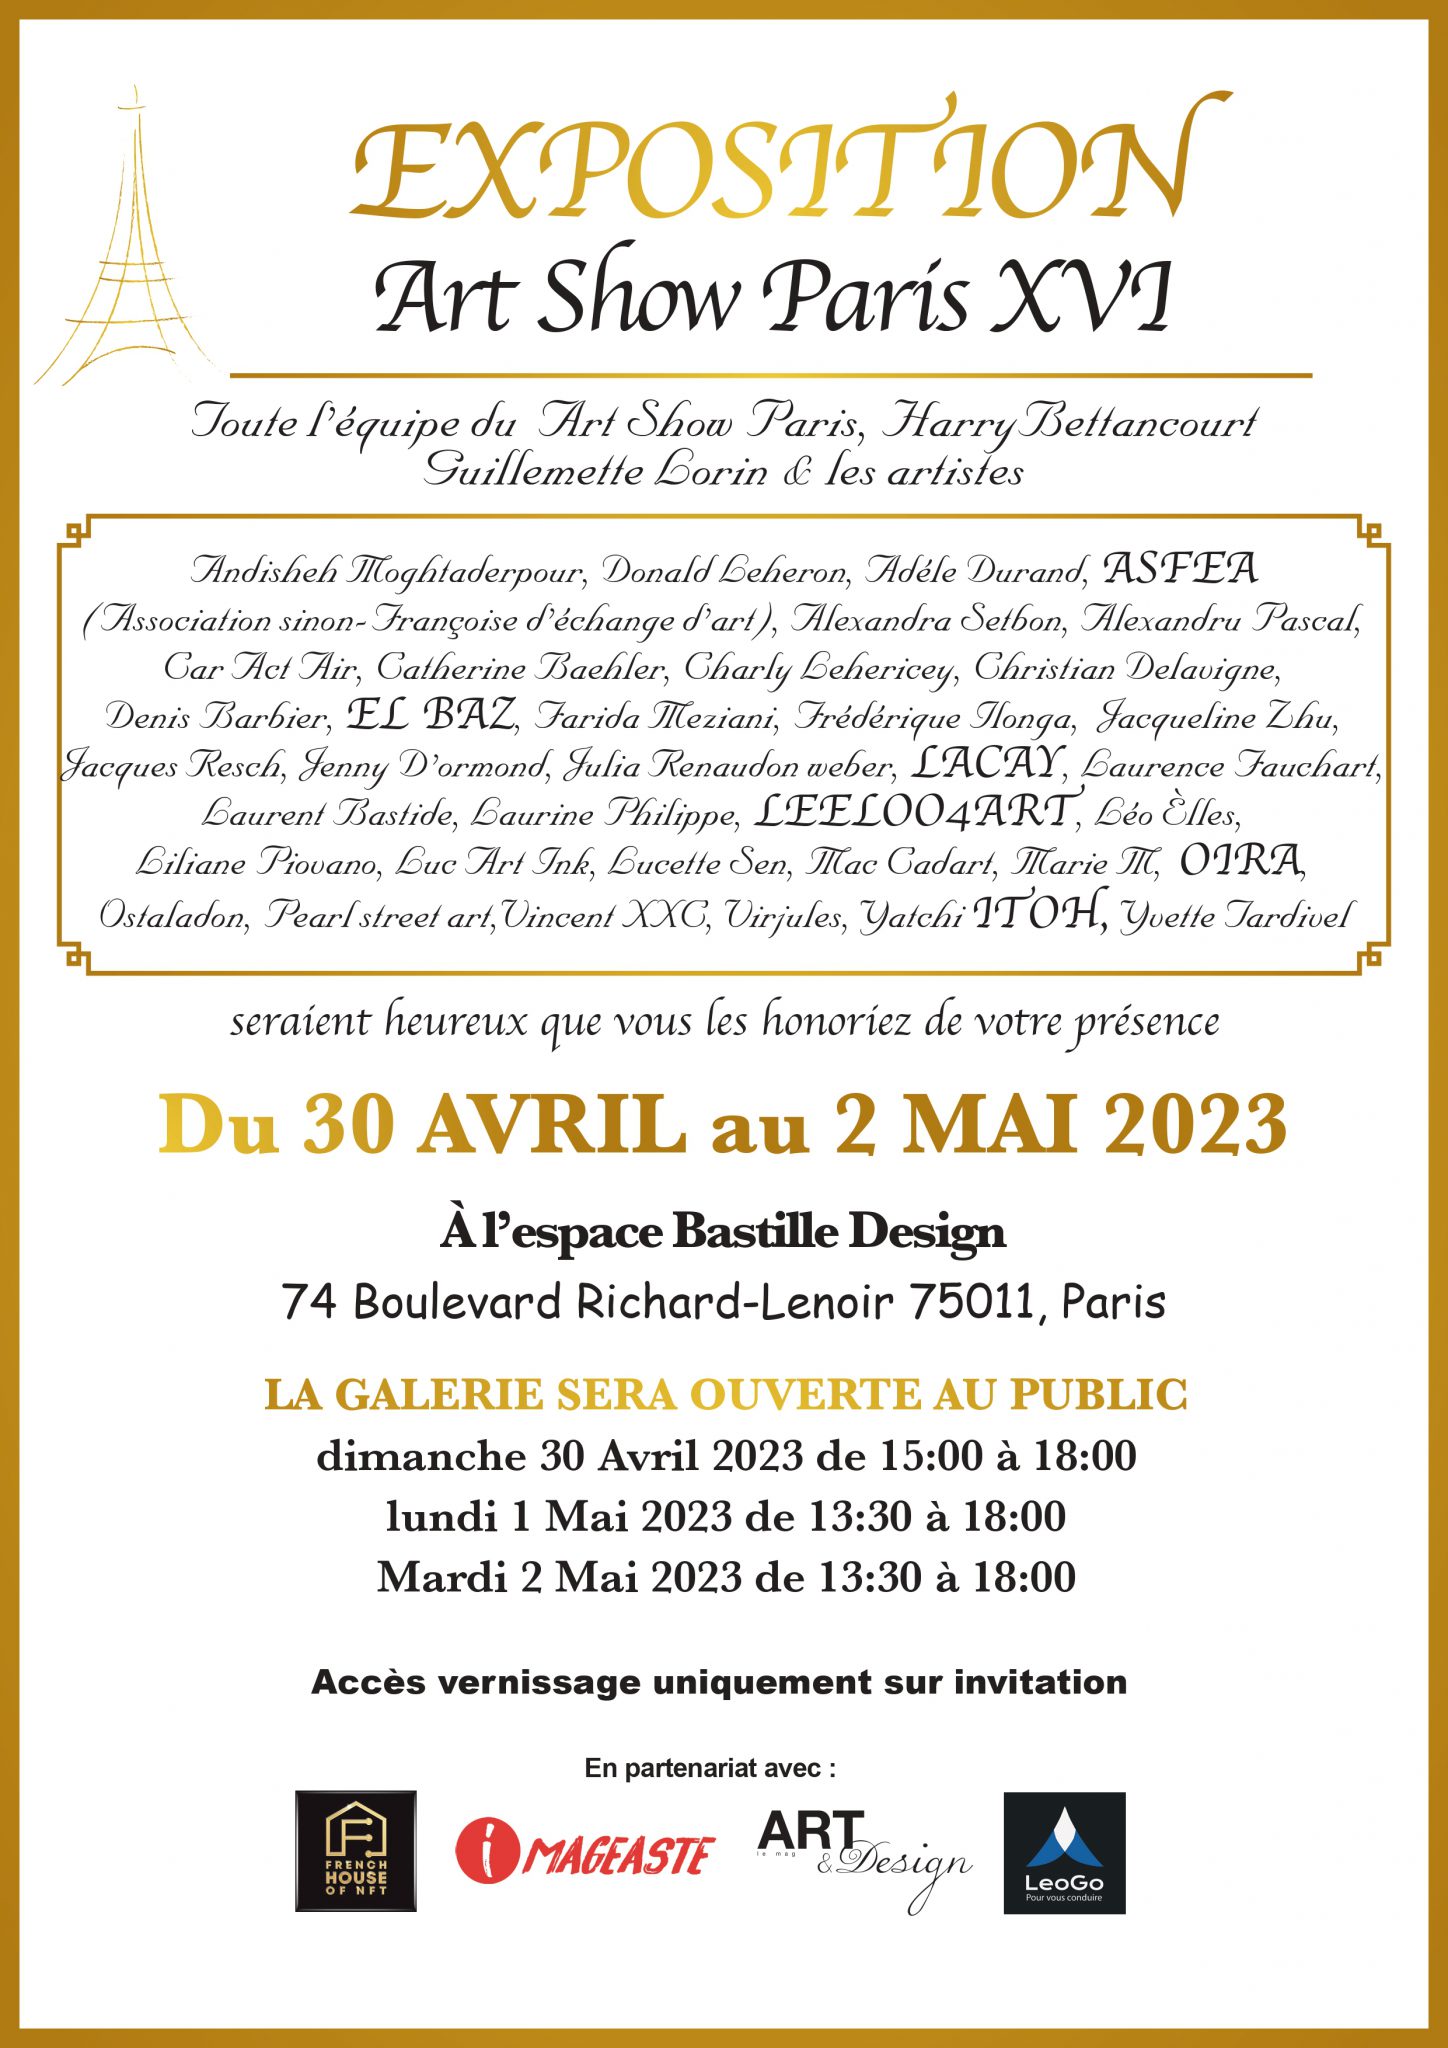 Paris Art Show XVI